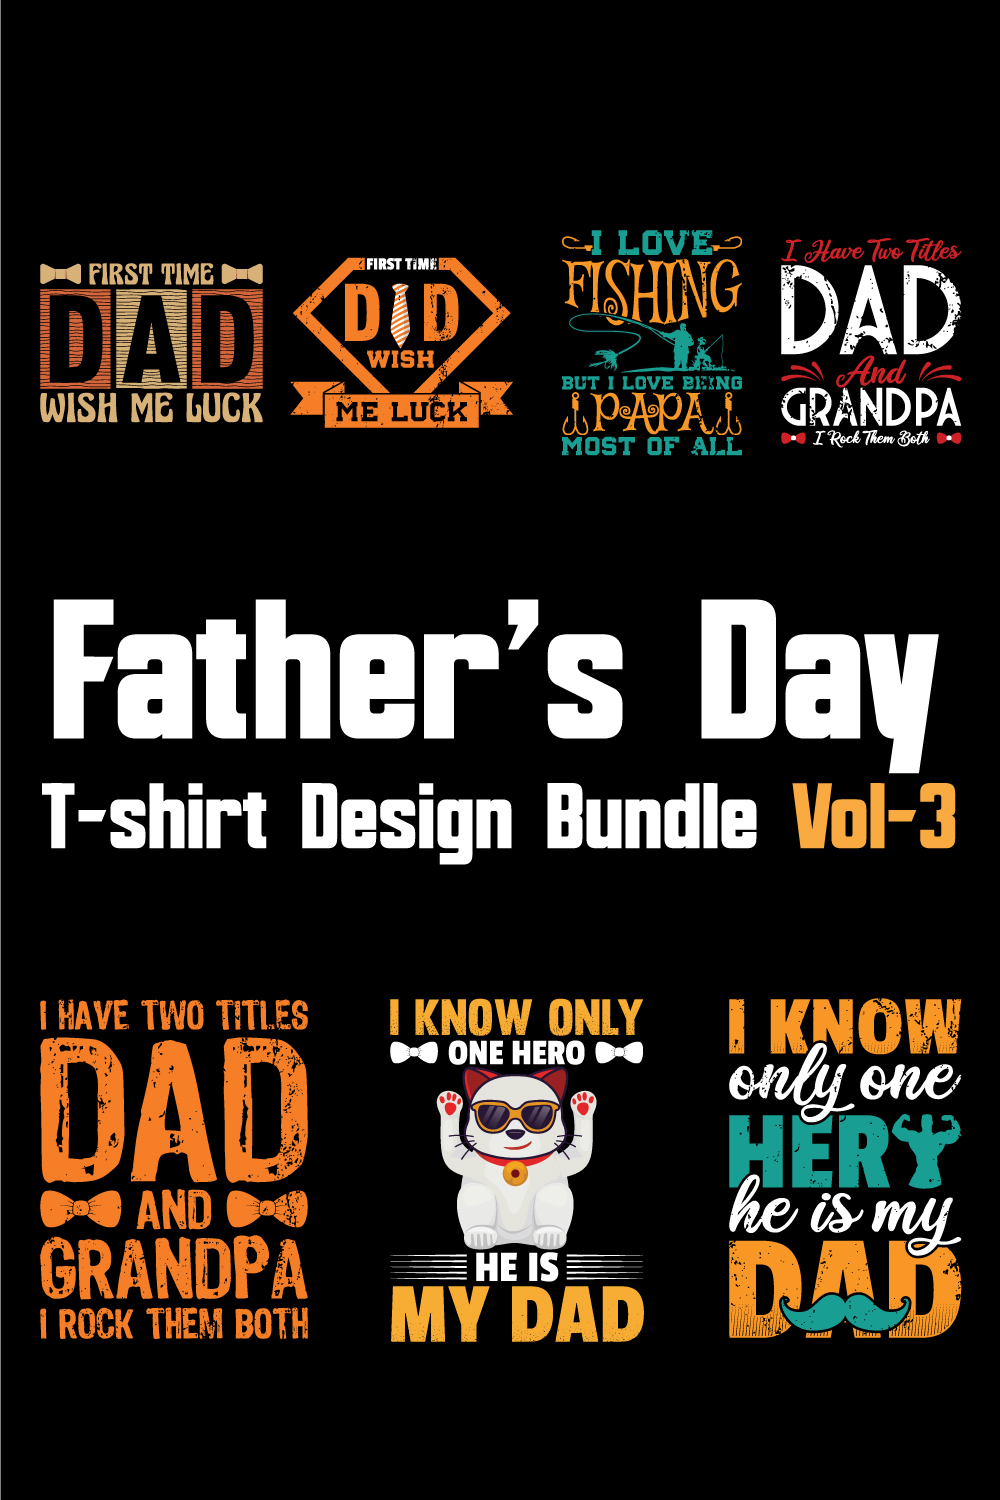 Father's Day T-shirt Design Bundle Vol-3 pinterest preview image.